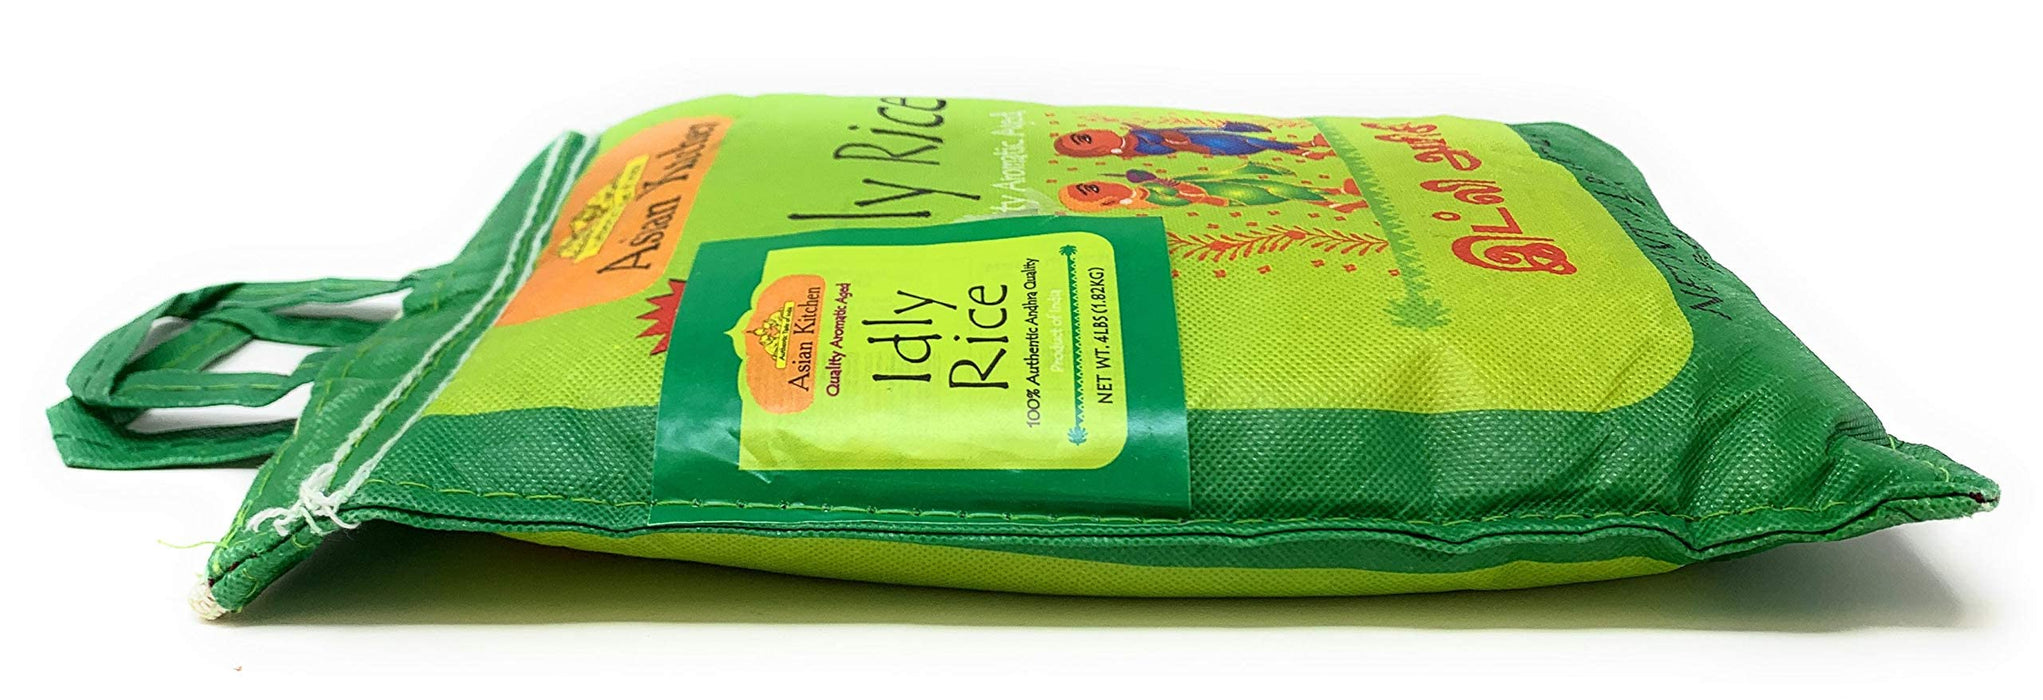 Asian Kitchen Idly (Idli) Rice 10-Pound Bag, 10lbs (4.54kg) Short Grain Rice ~ All Natural | Gluten Friendly | Vegan | Indian Origin | Export Quality